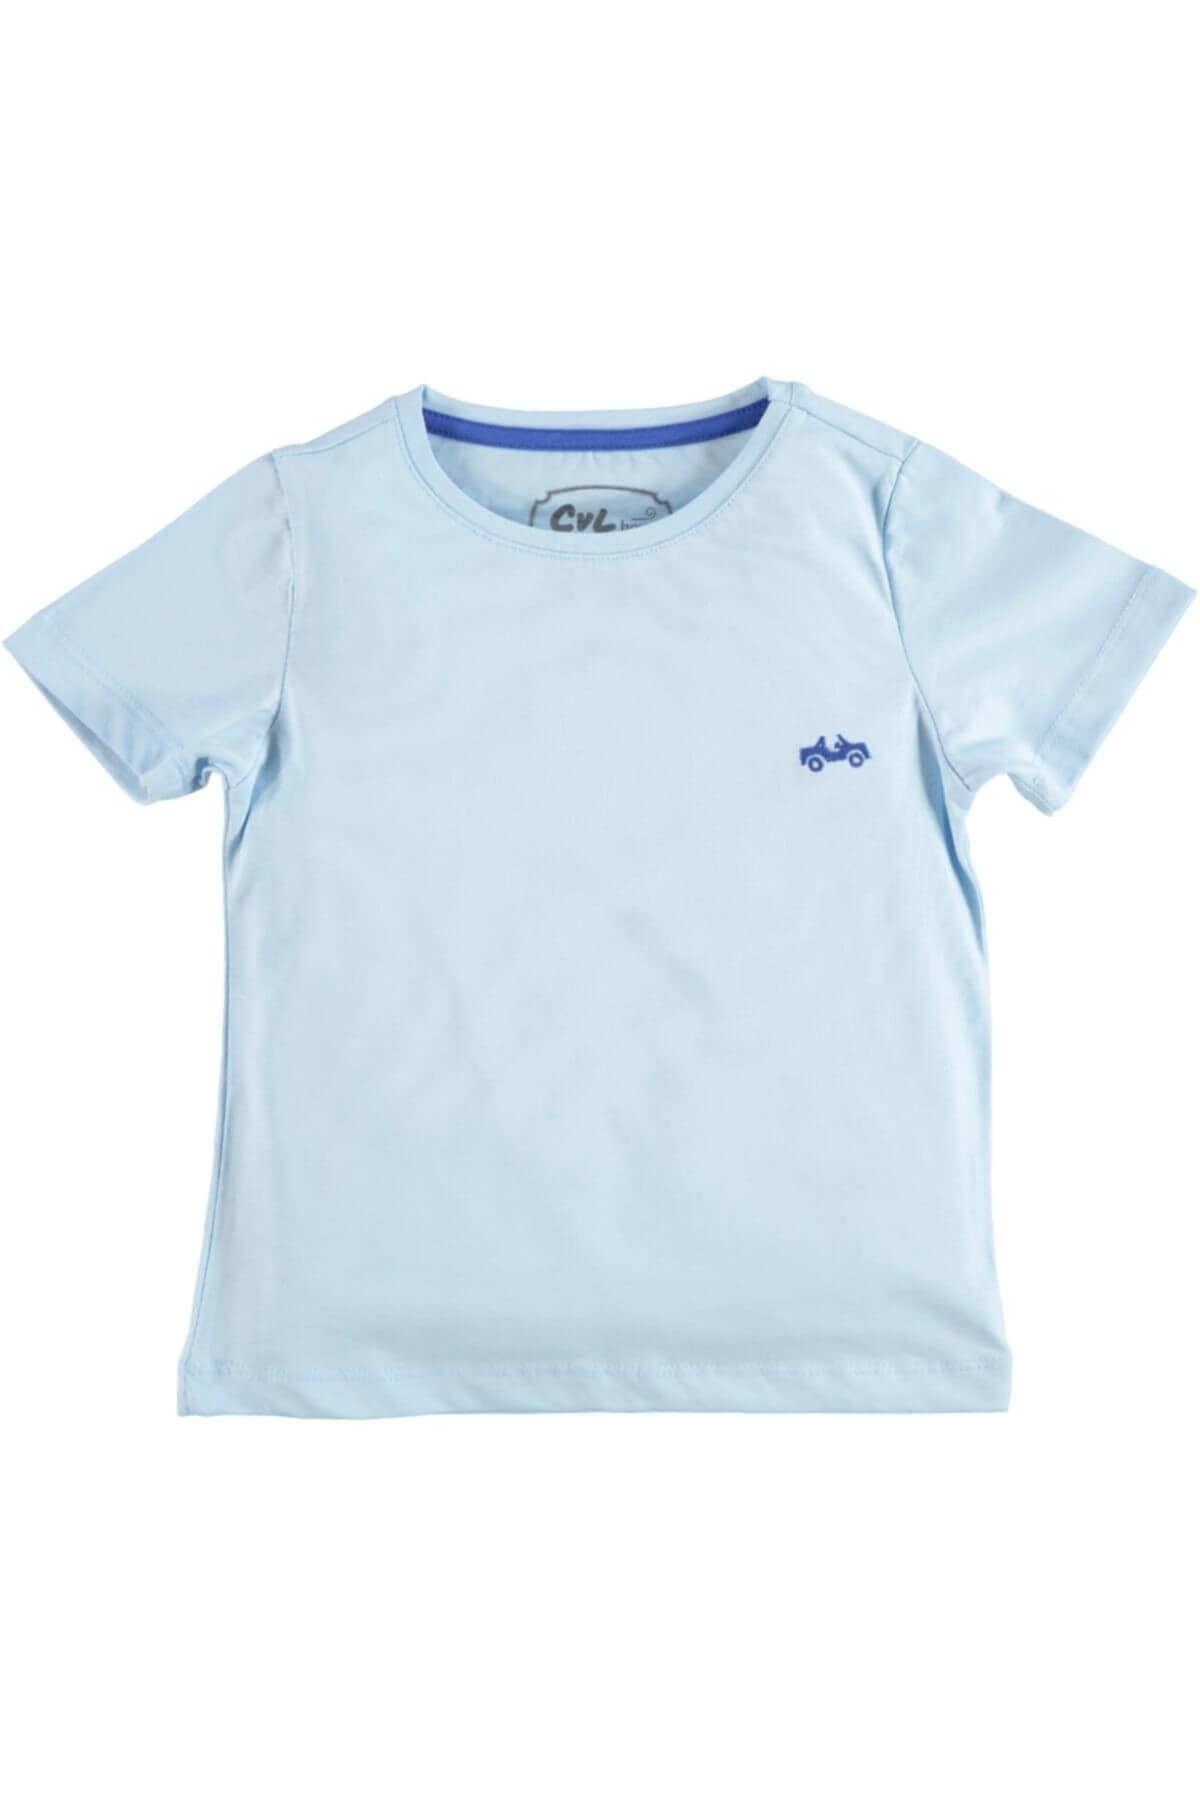 Cvl Mavi Erkek  Çocuk T-Shirt 18A197725Y81